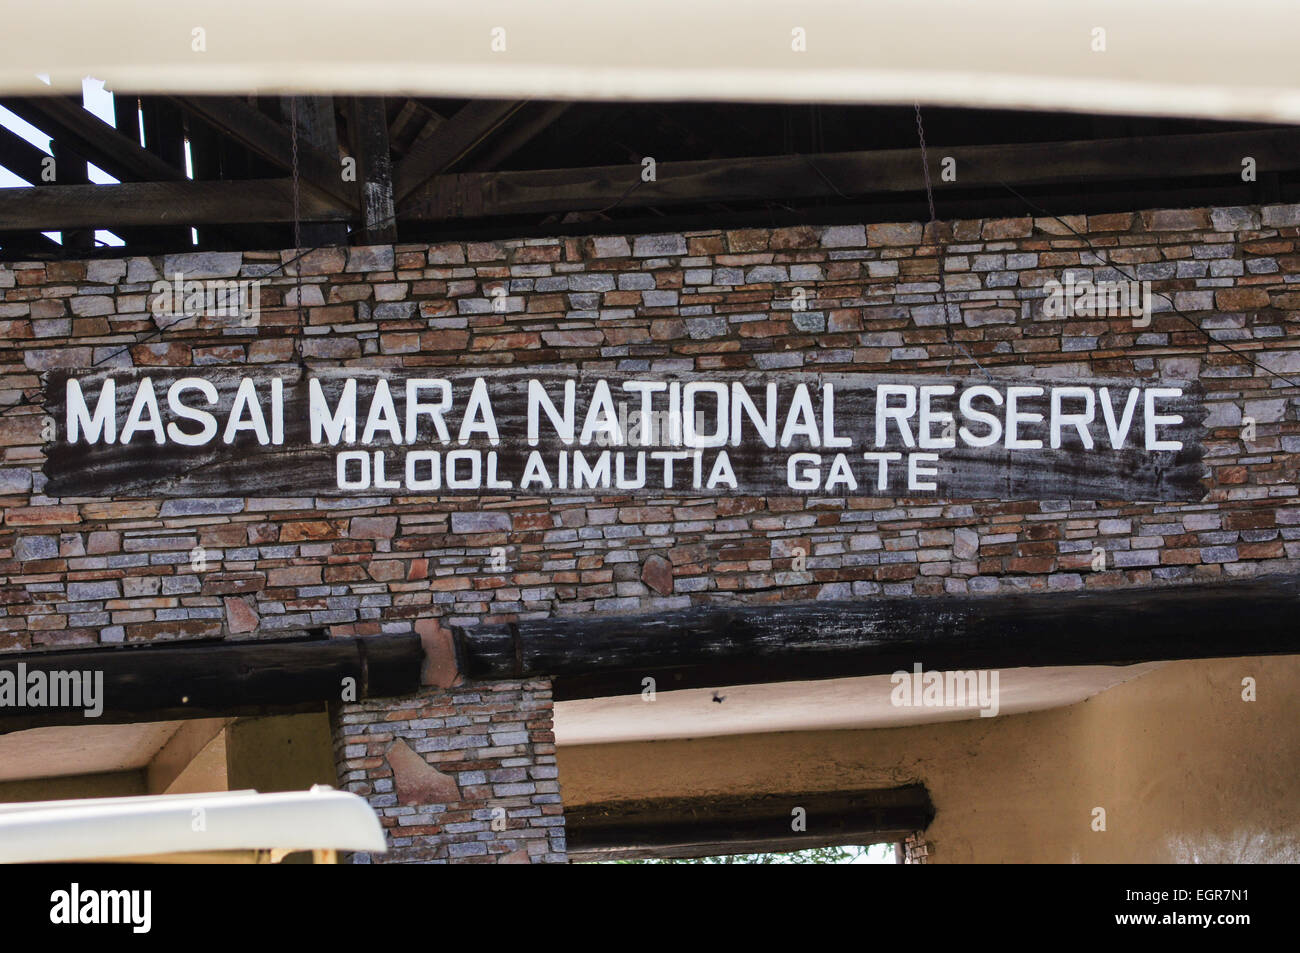 Signe pour le Masai Mara National Reserve (oloolaimutia gate), Kenya, Africa Banque D'Images